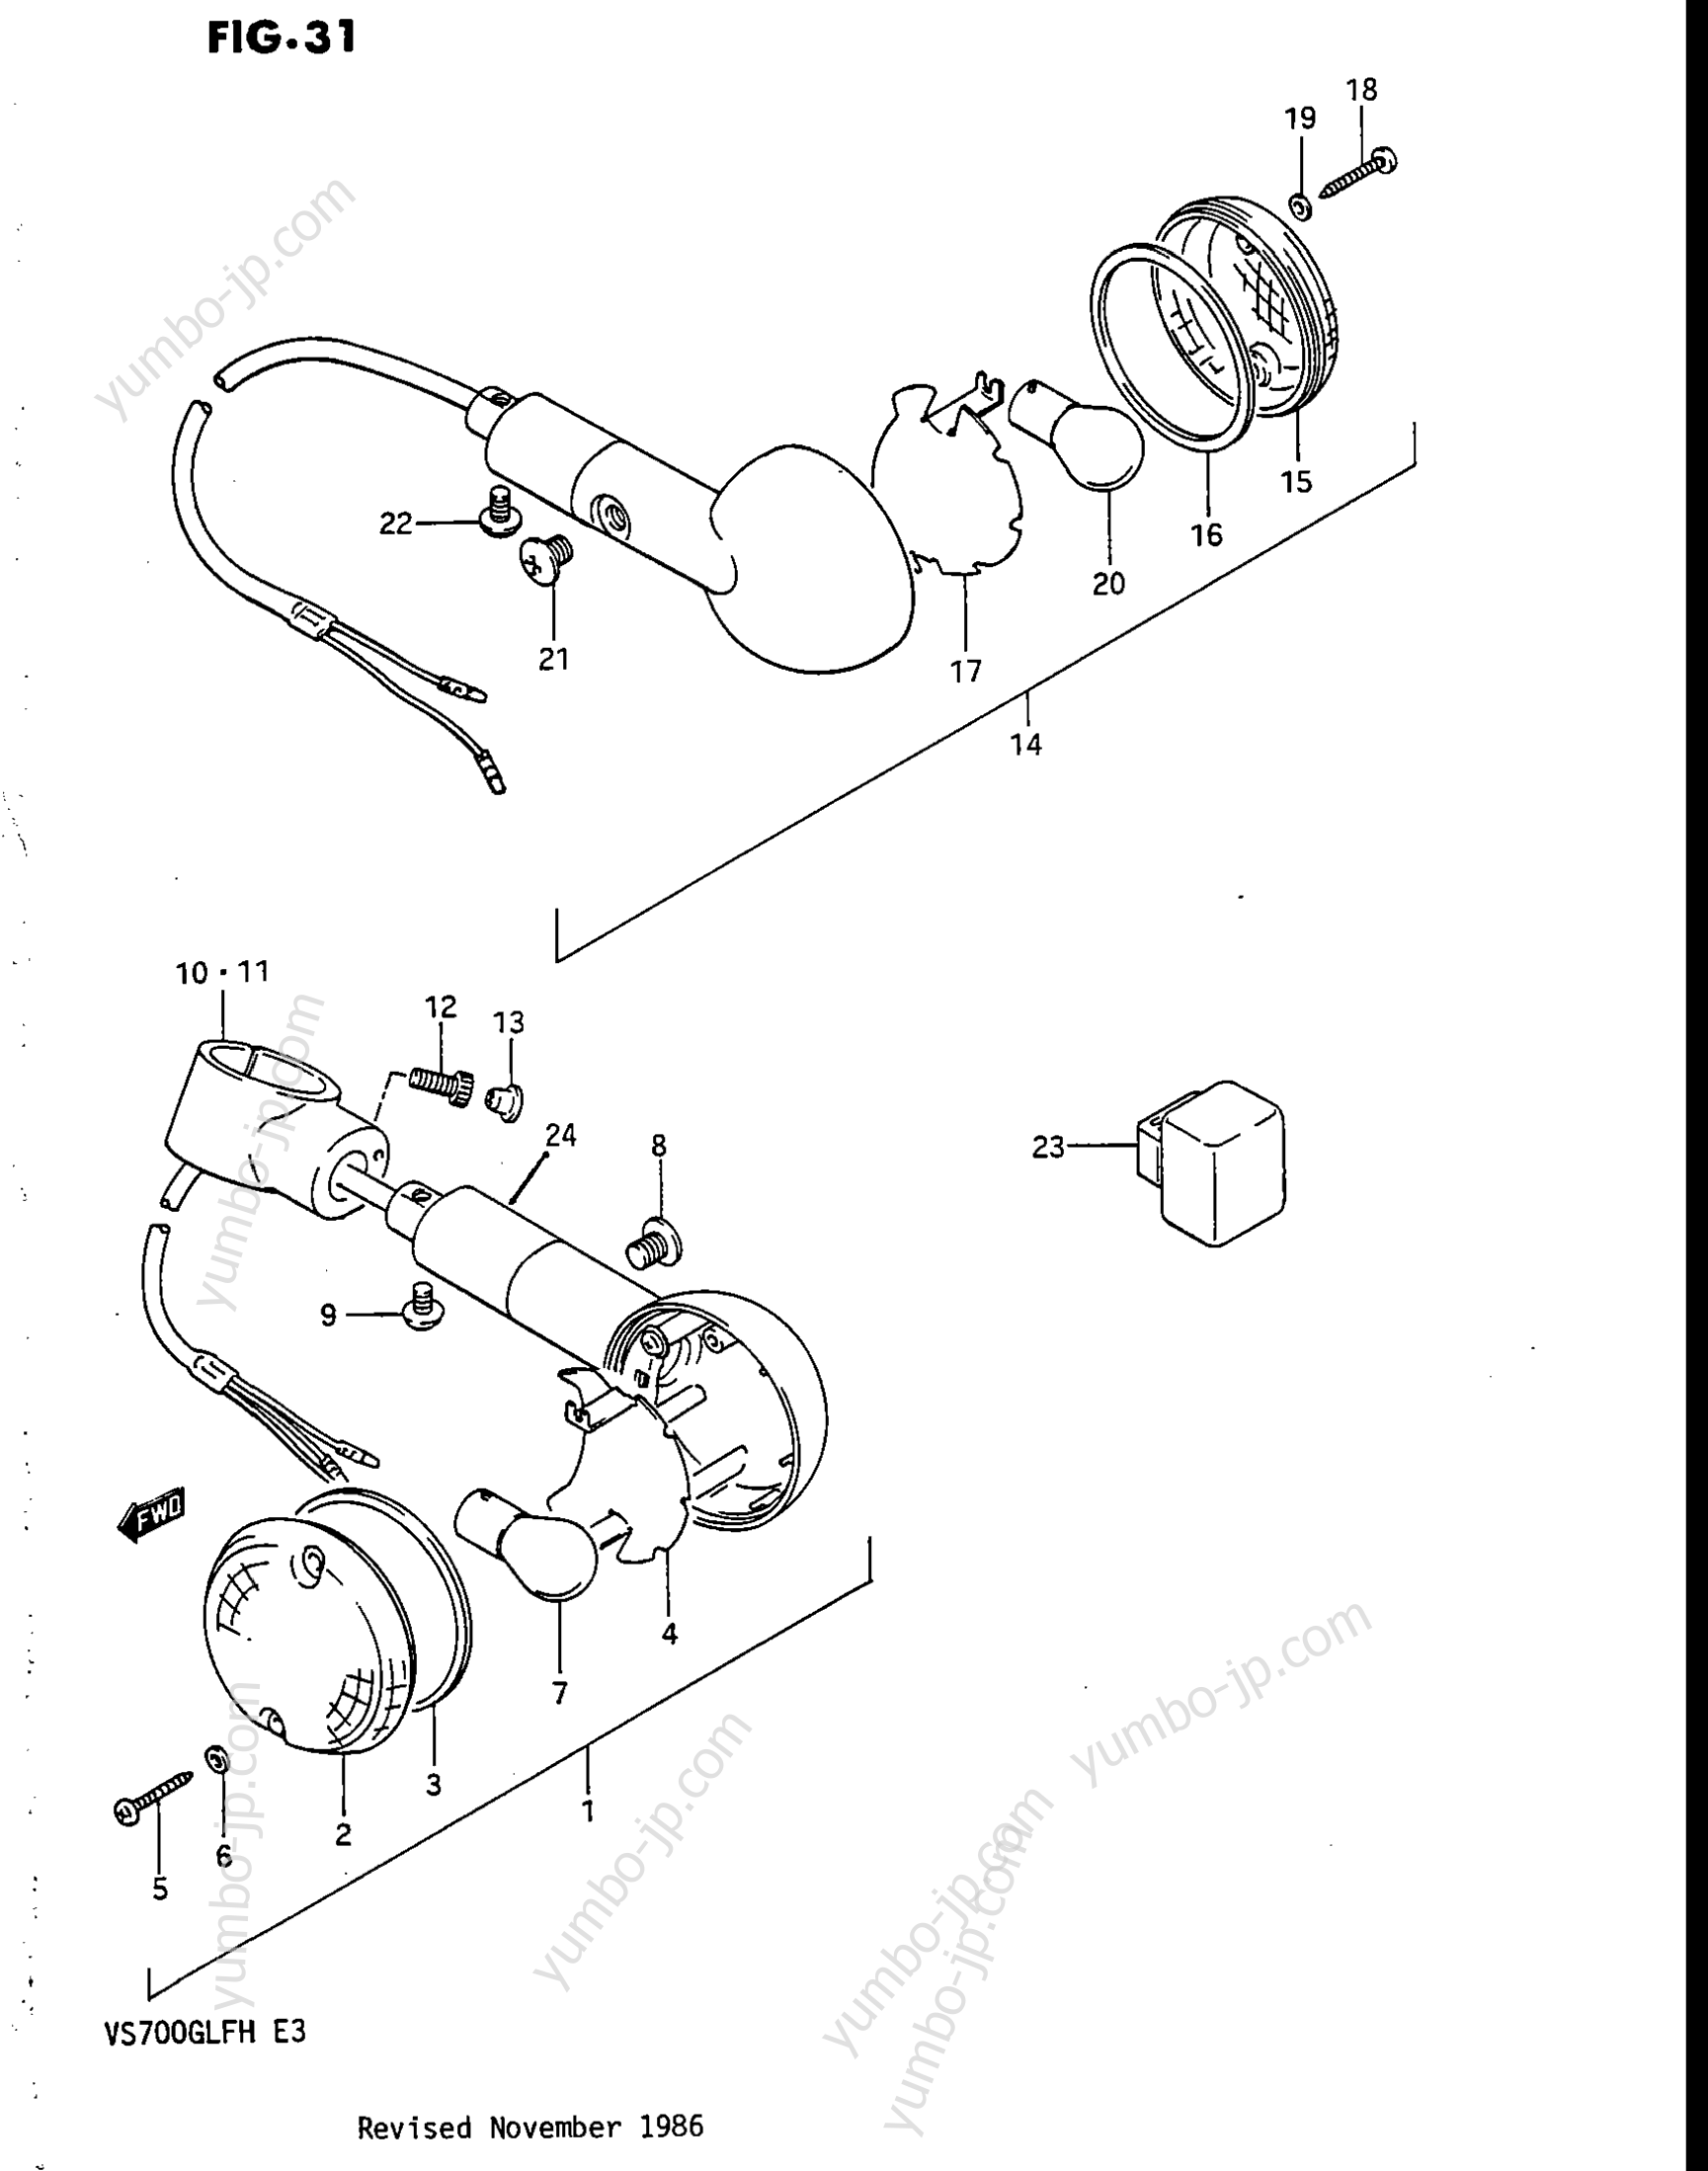 TURN SIGNAL LAMP for motorcycles SUZUKI Intruder (VS700GLEF) 1987 year